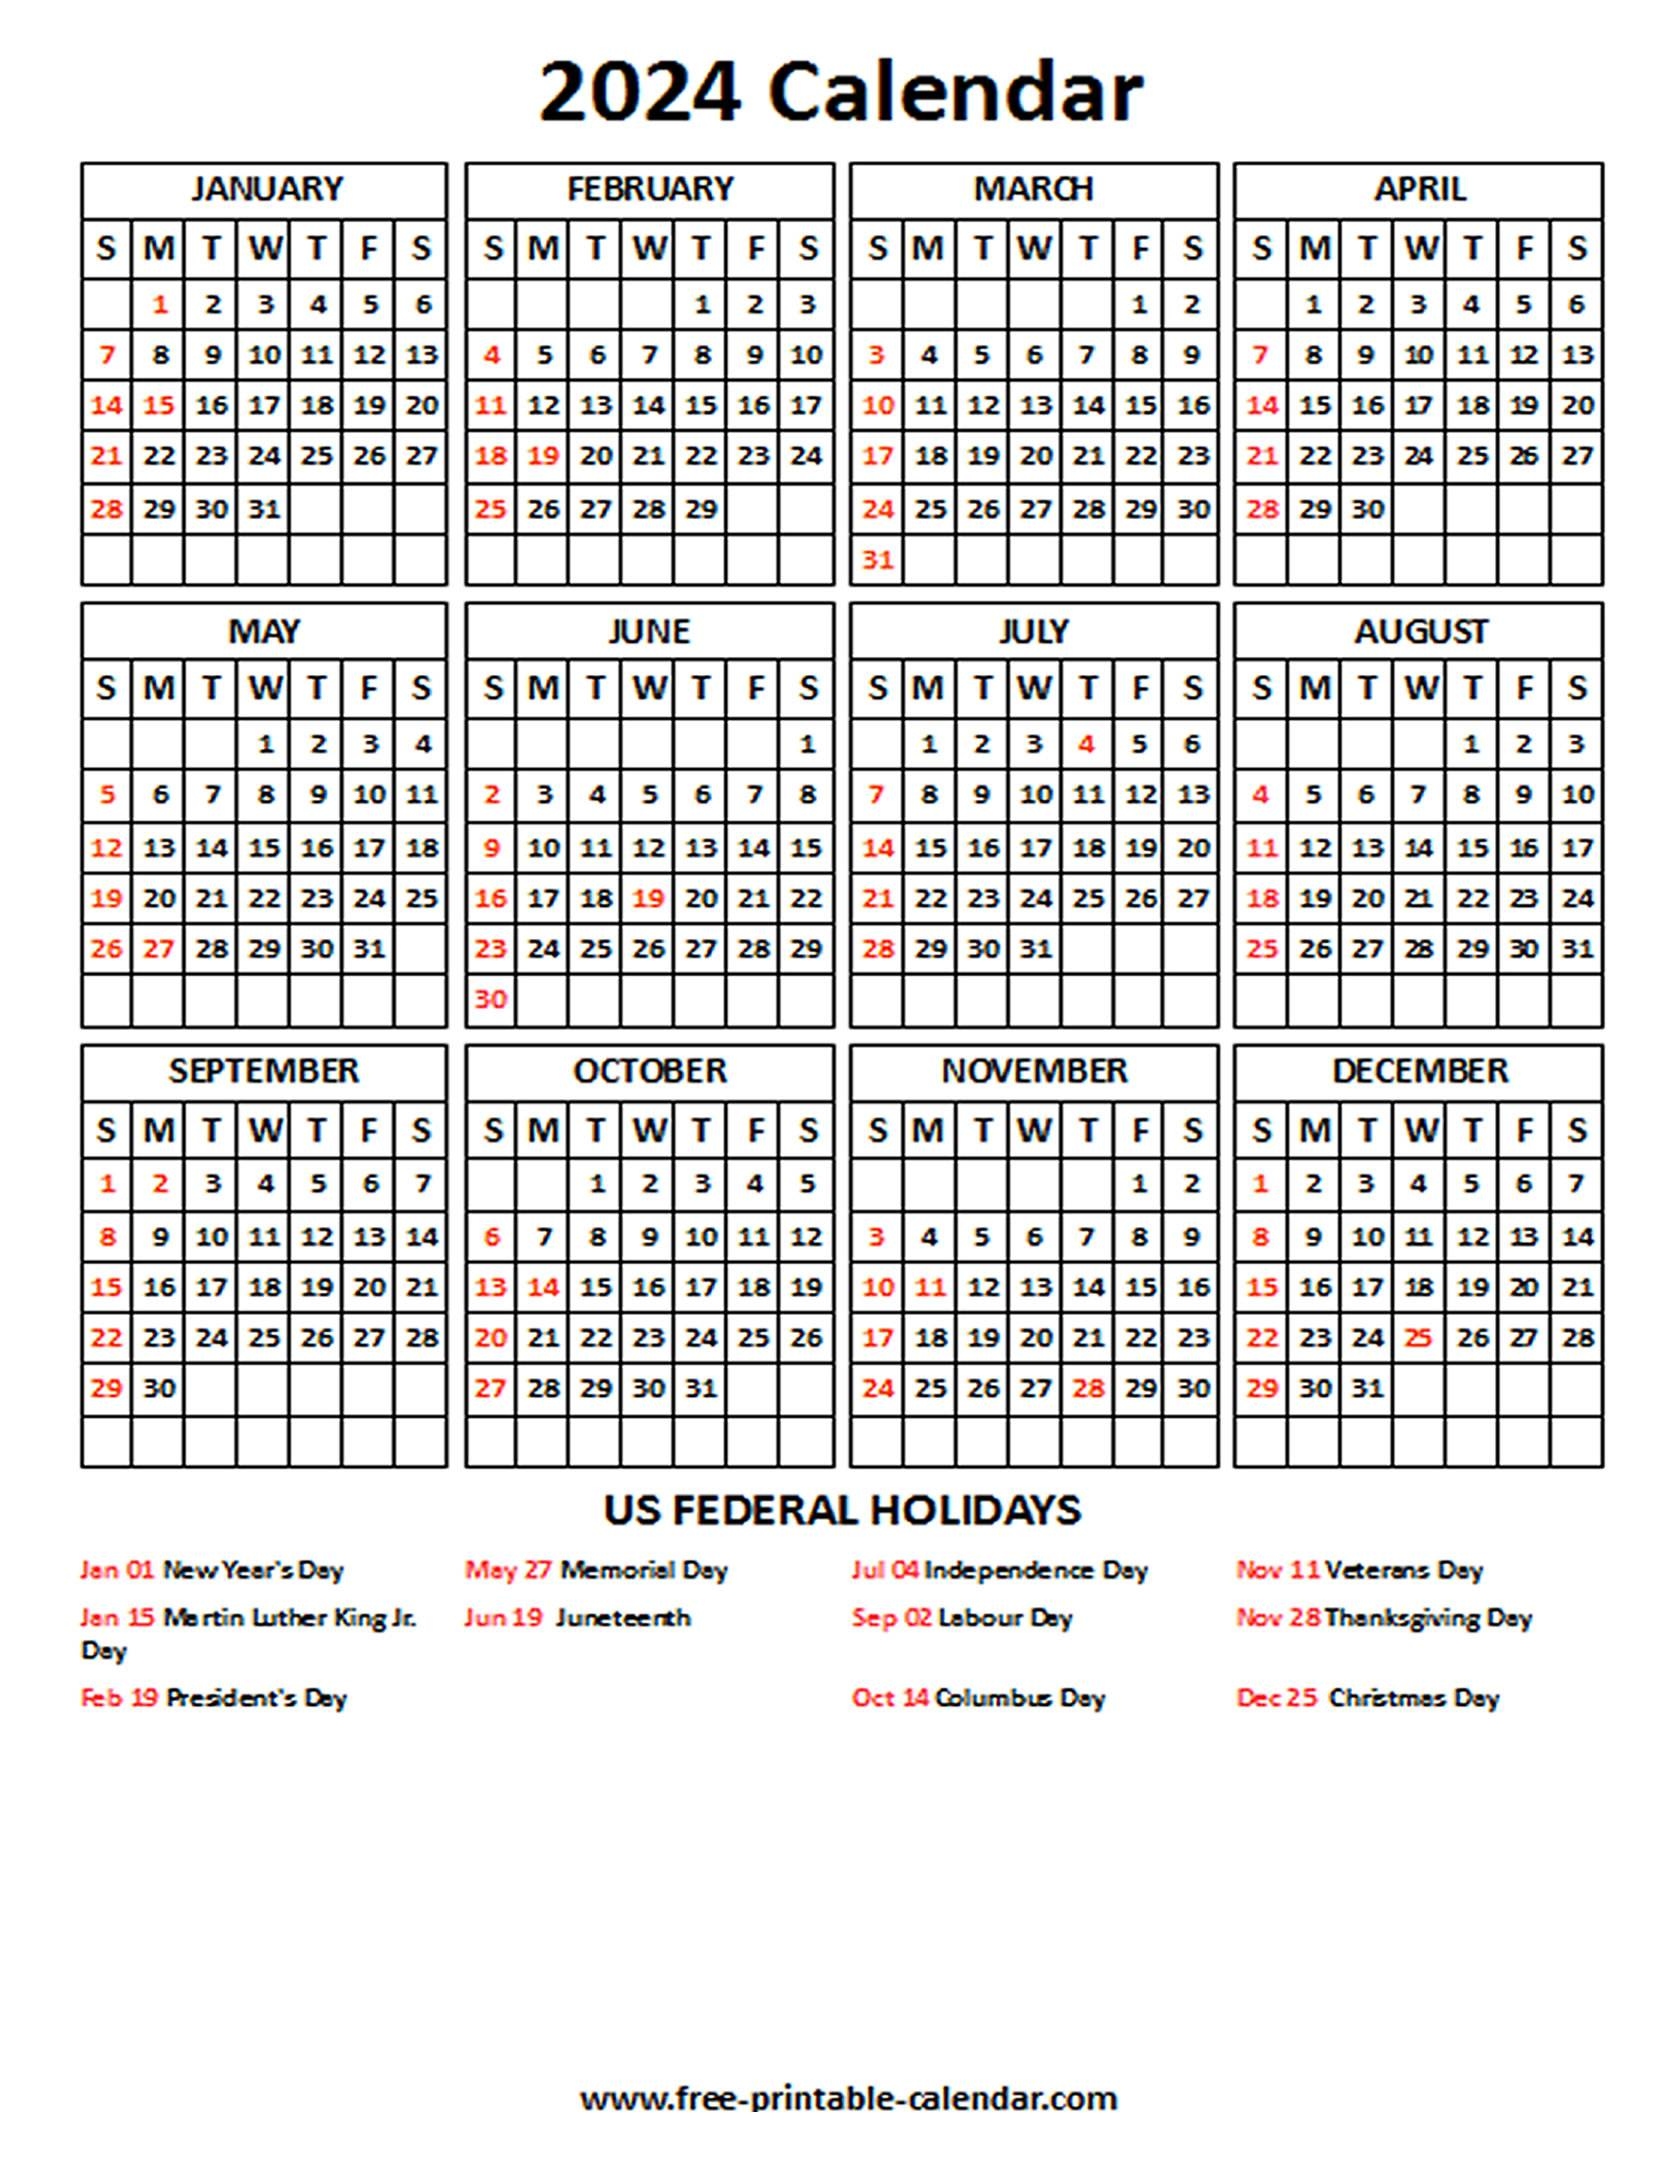 2024 Calendar With Us Holidays - Free-Printable-Calendar pertaining to Free Printable Calendar 2024 With Us Holidays